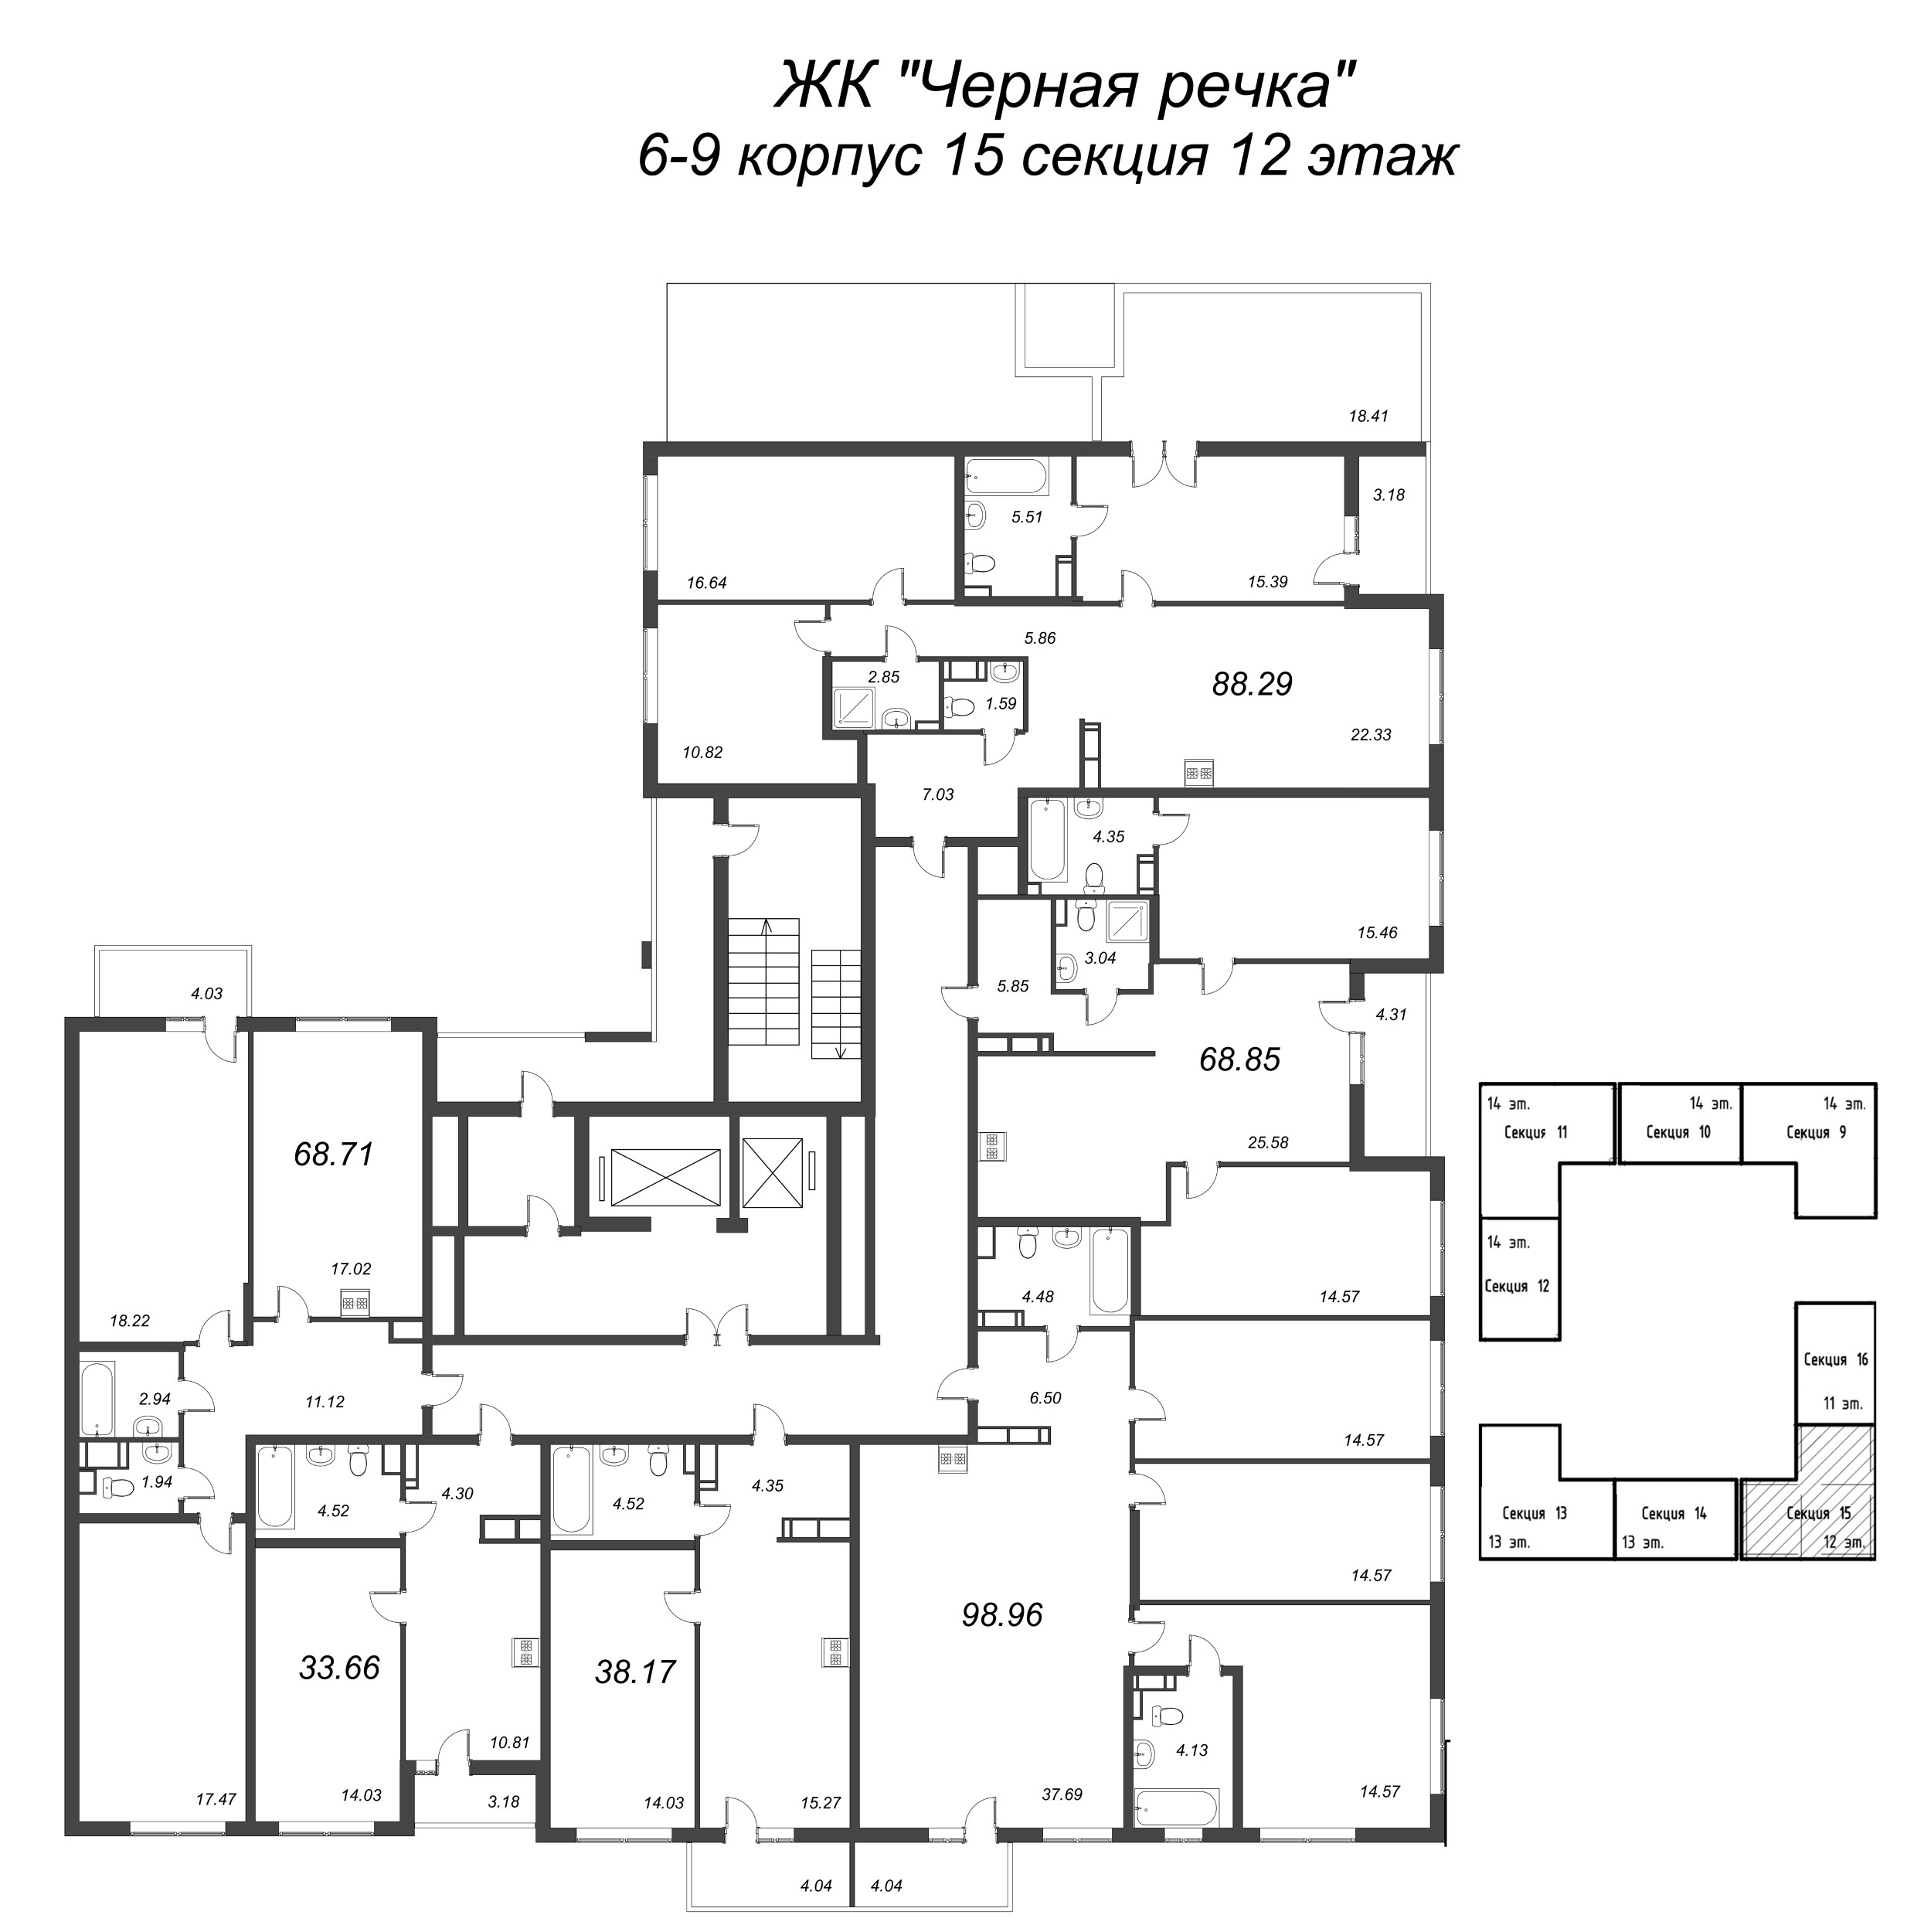 4-комнатная (Евро) квартира, 98.96 м² - планировка этажа